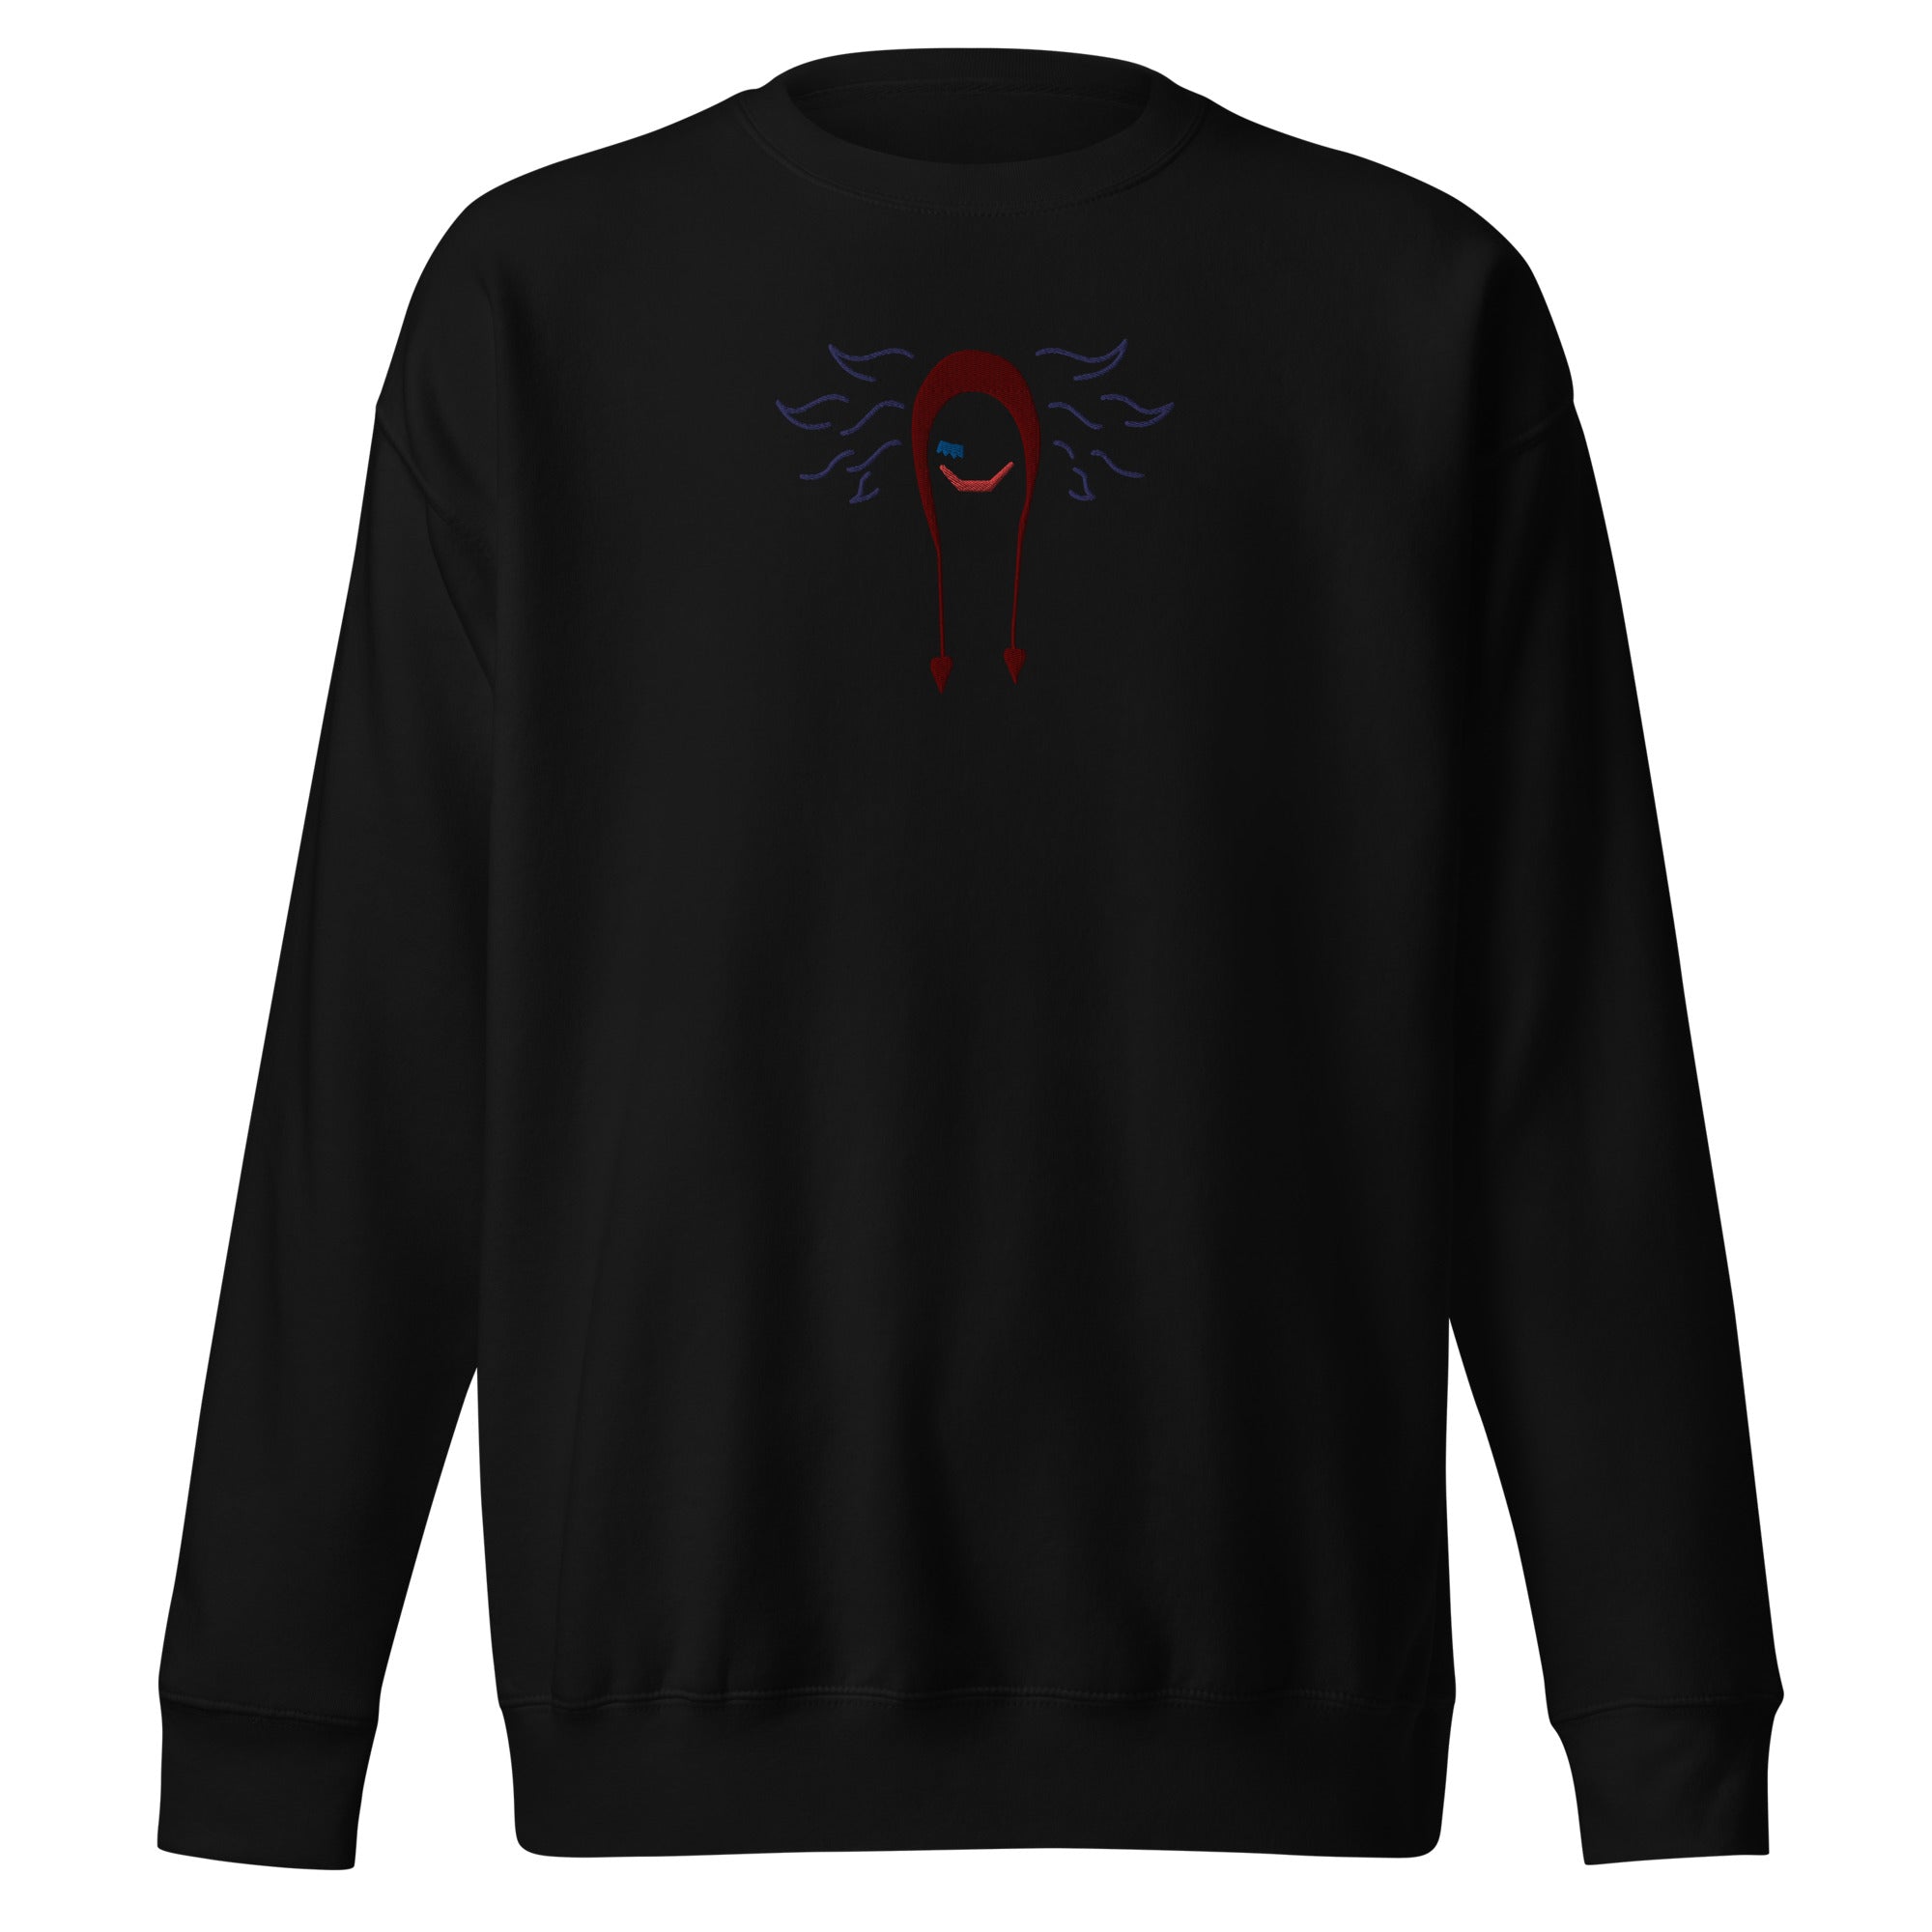 Corazon Embroidered Unisex Premium Anime Sweatshirt